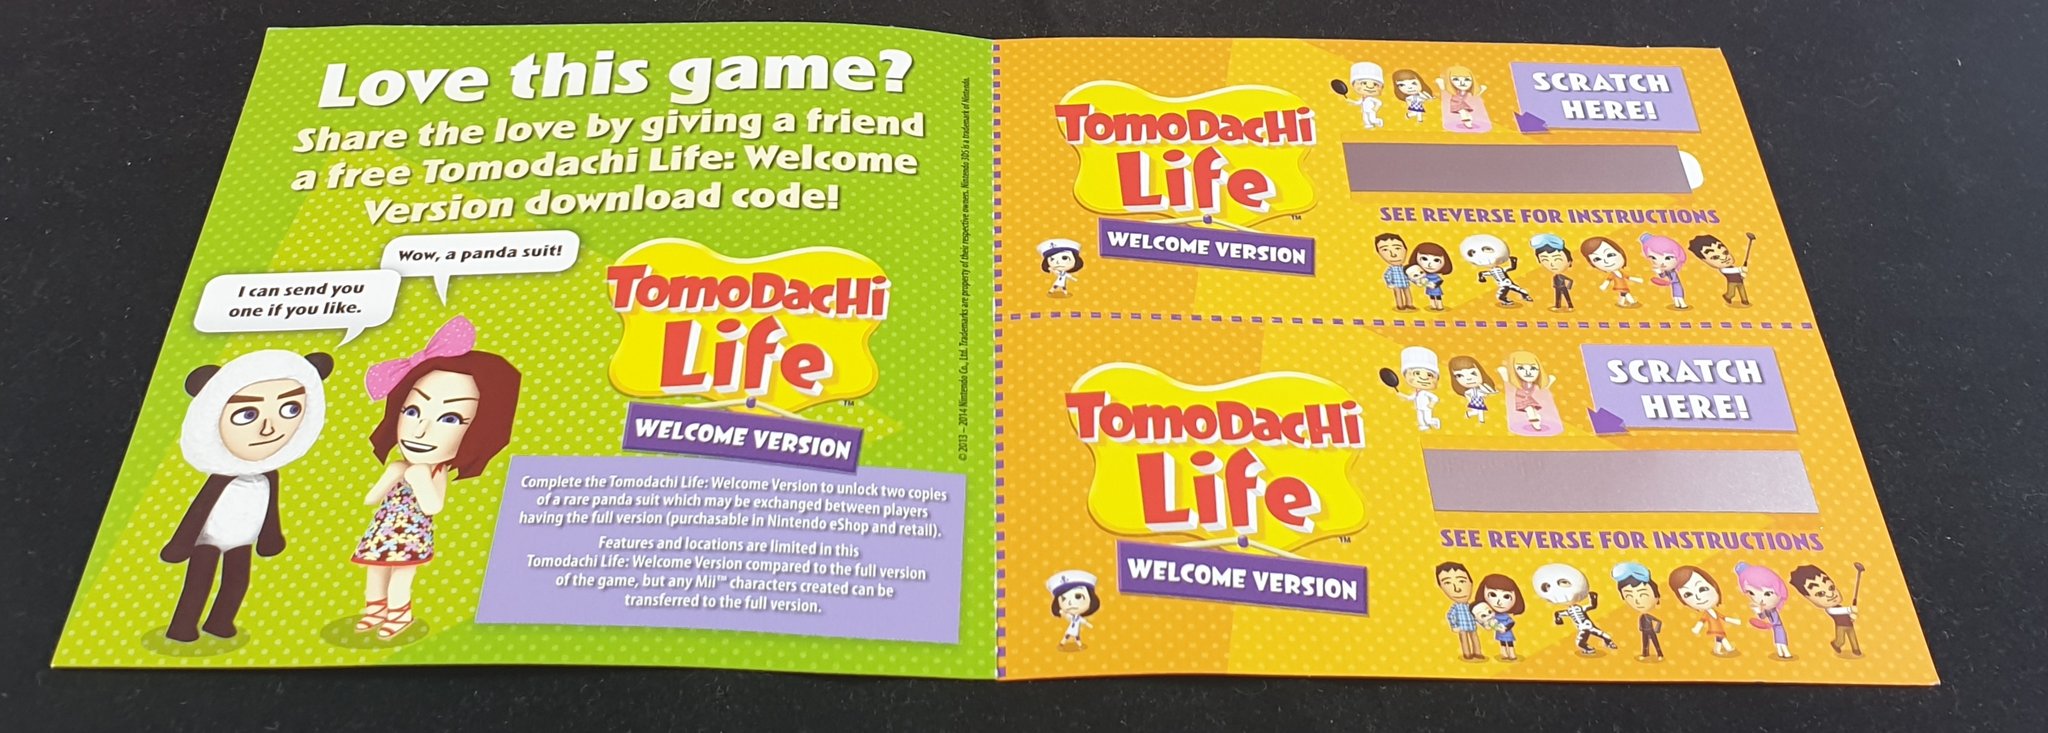 tomodachi life download code free